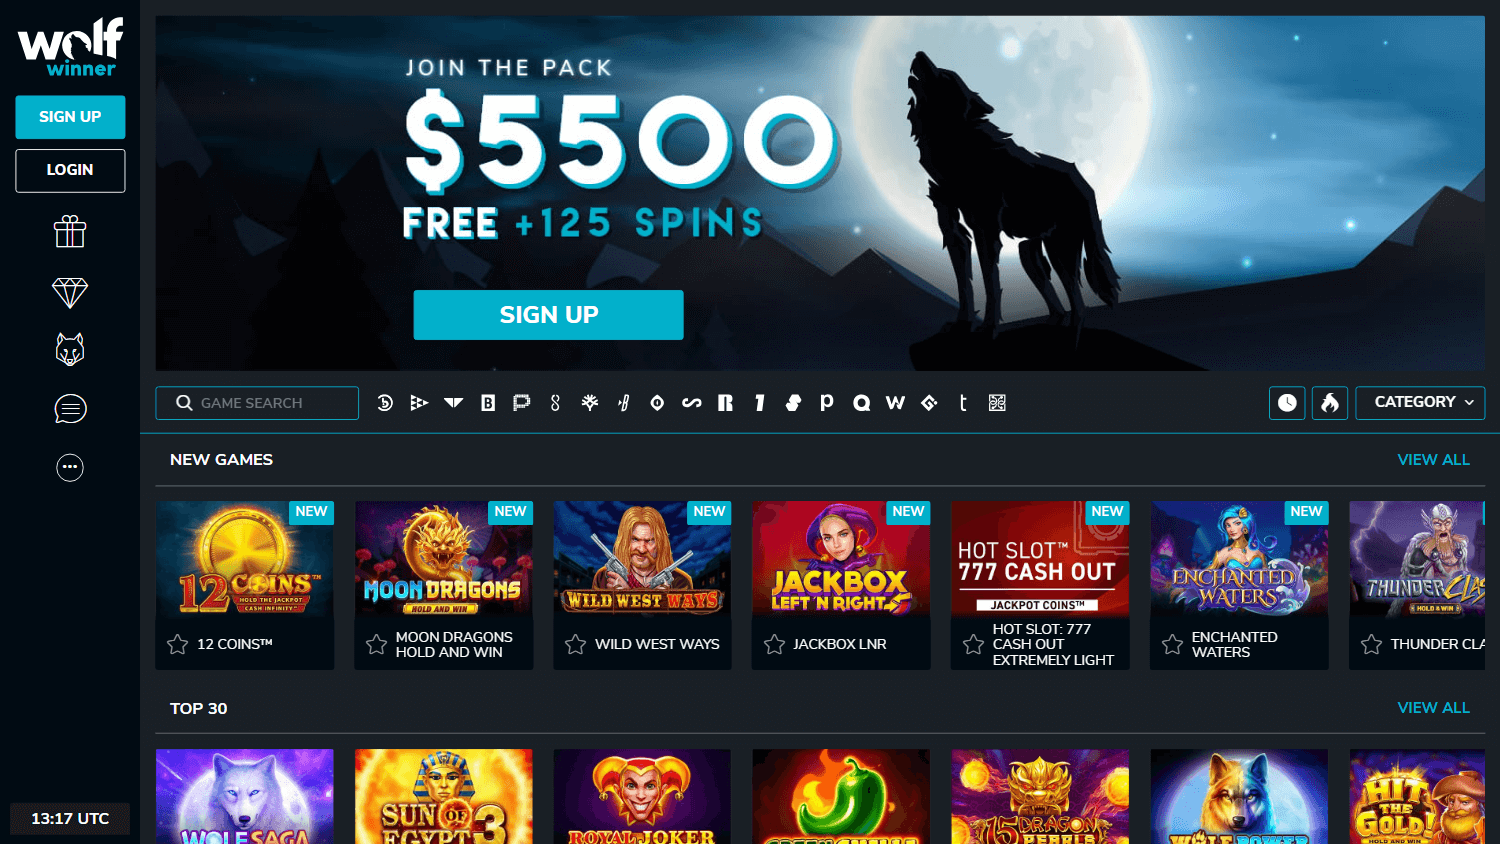 wolf_winner_casino_homepage_desktop